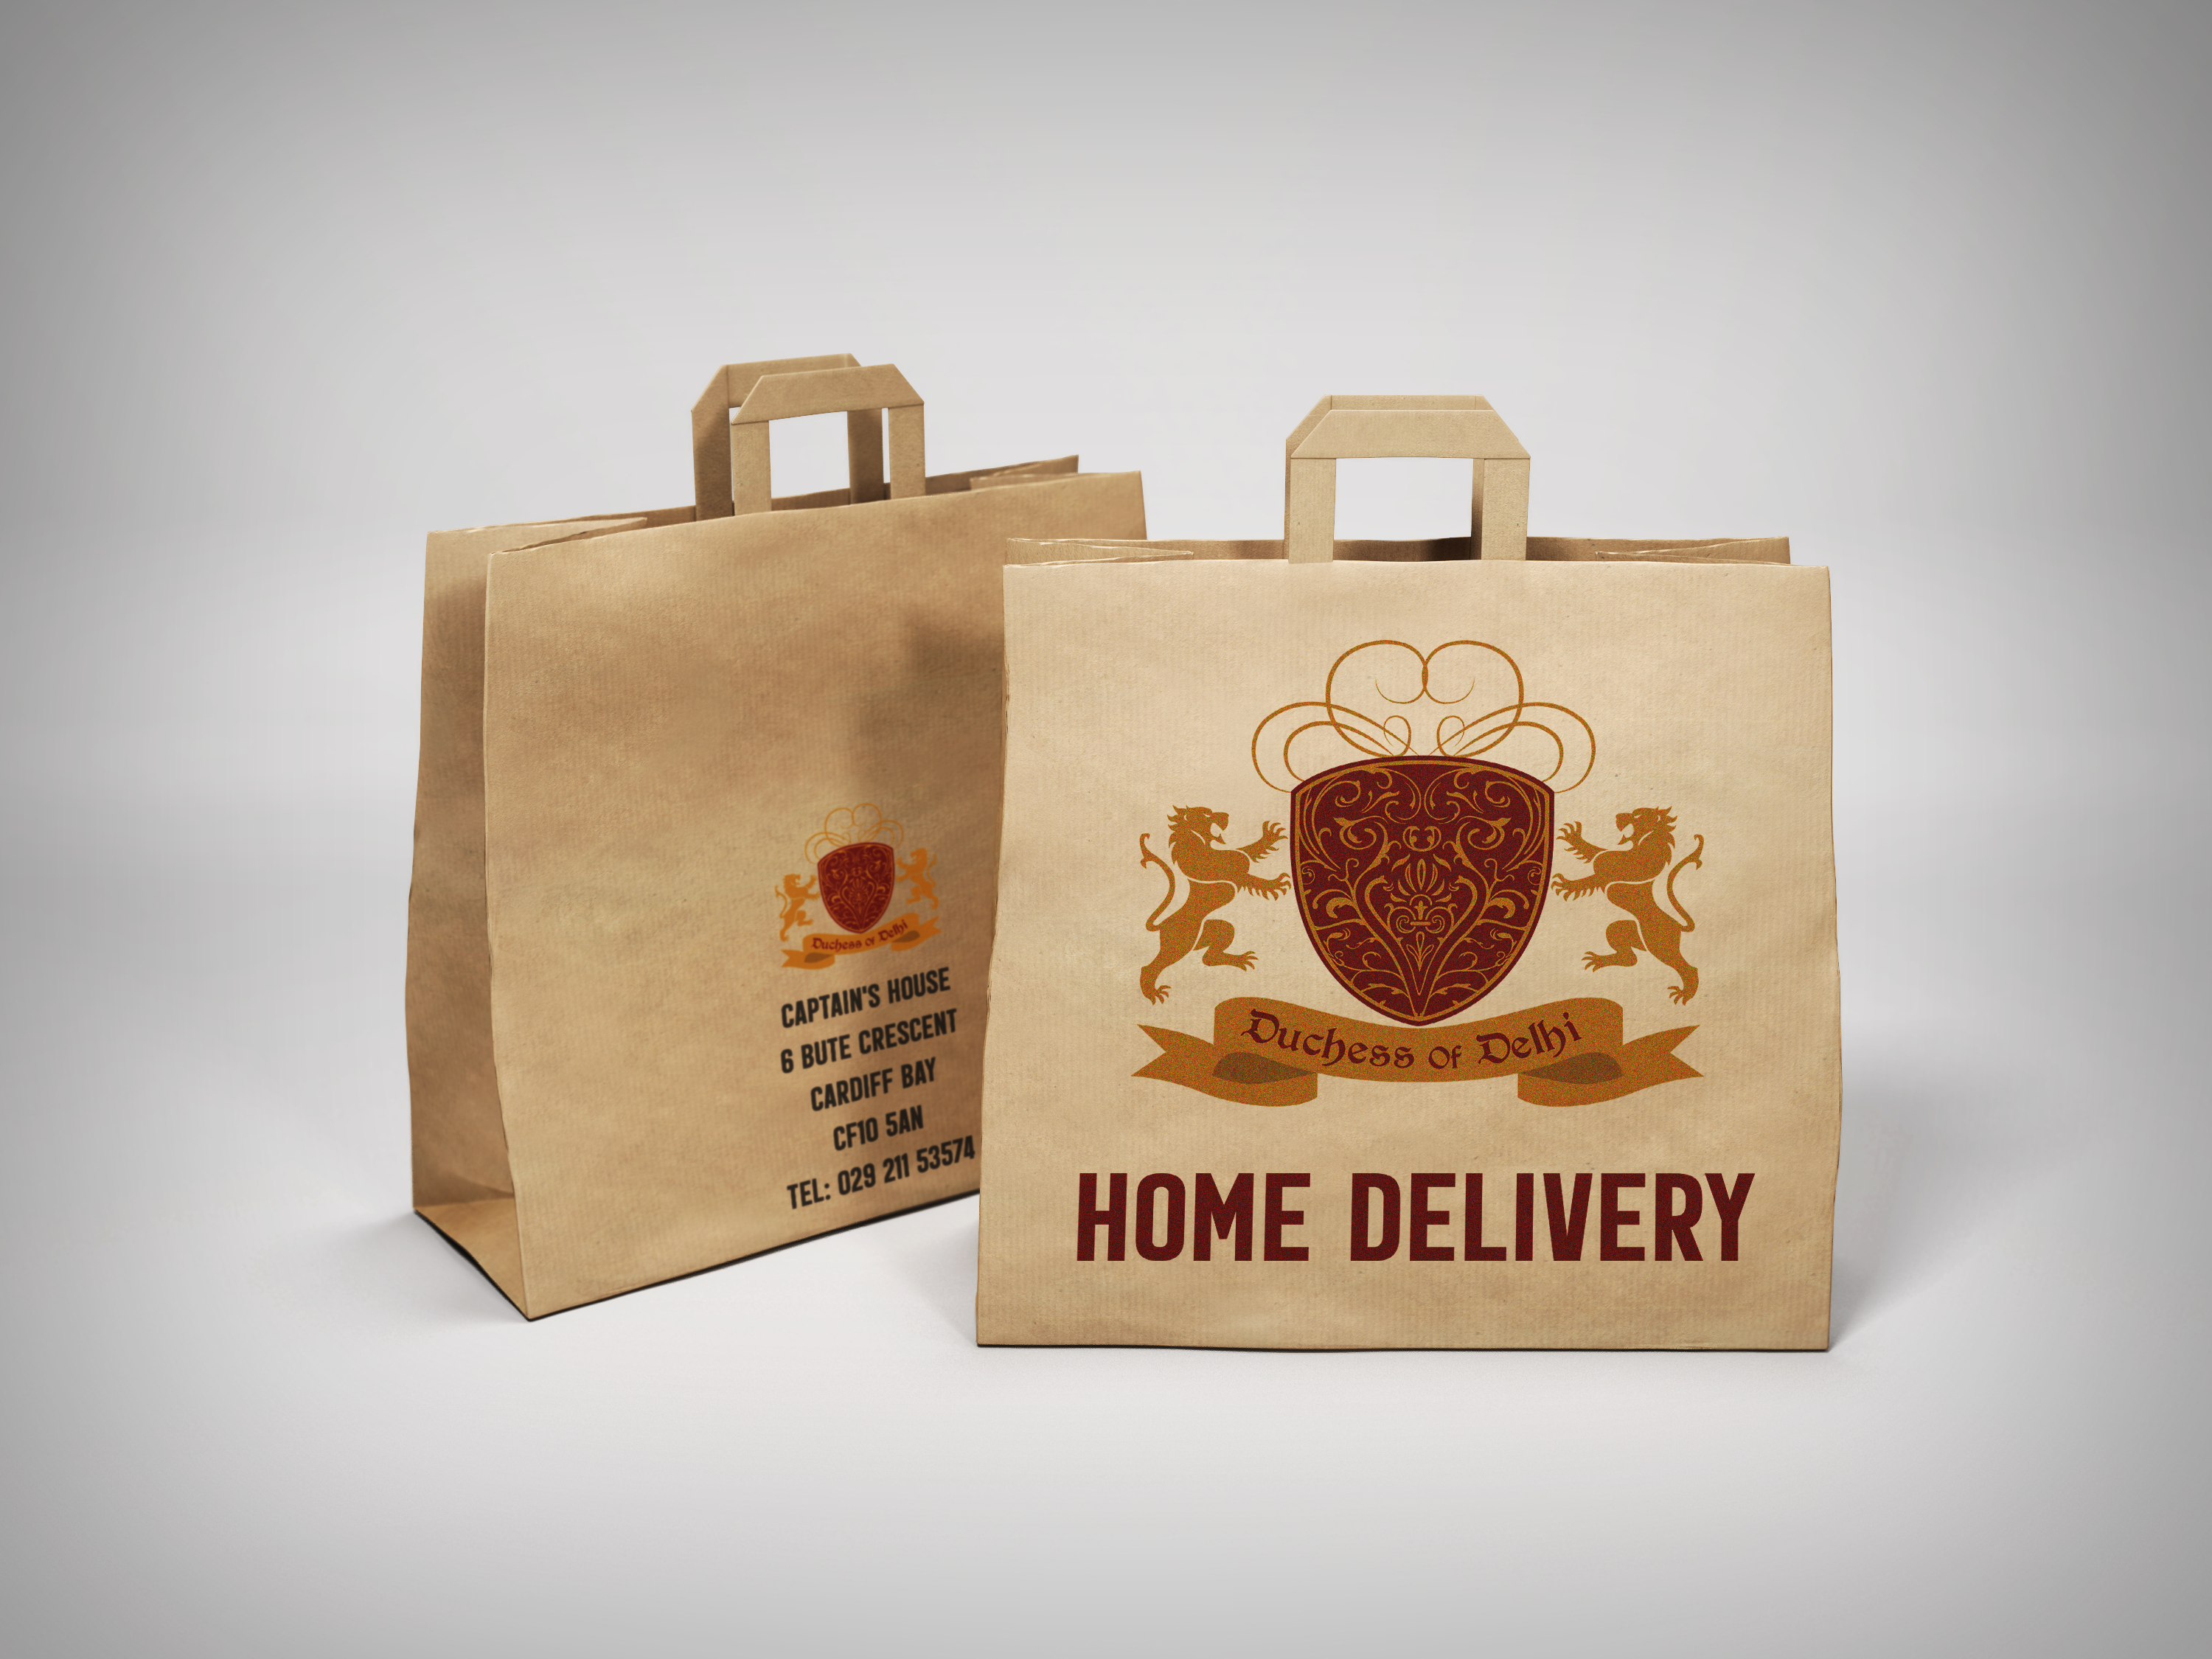 duchess of delhi home delivery